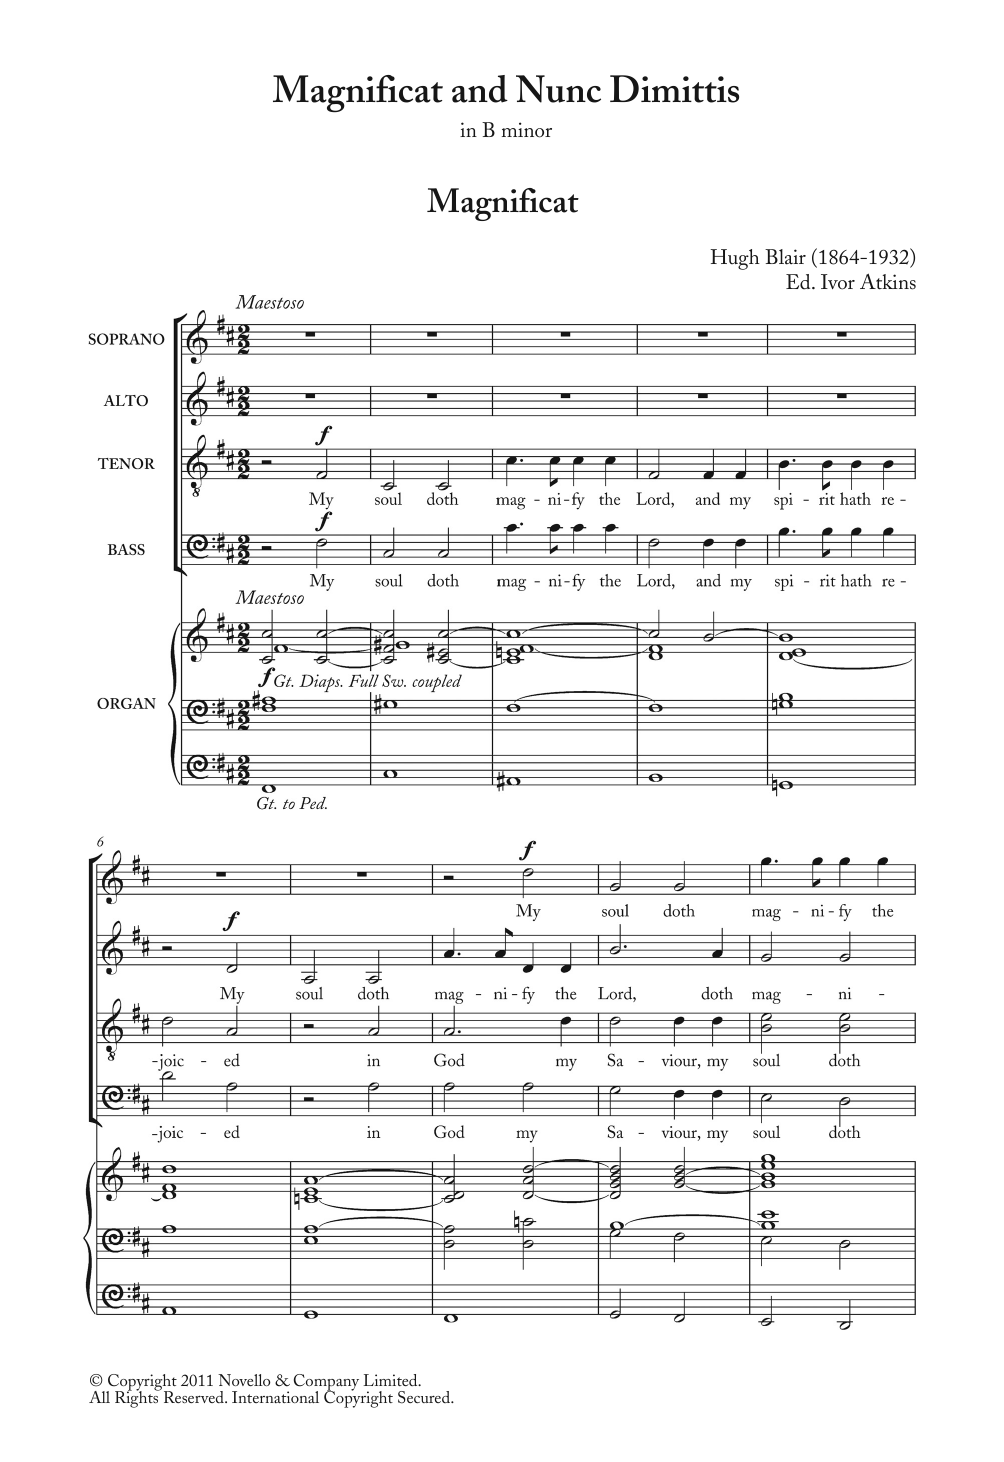 Download Hugh Blair Magnificat And Nunc Dimittis In B Minor Sheet Music